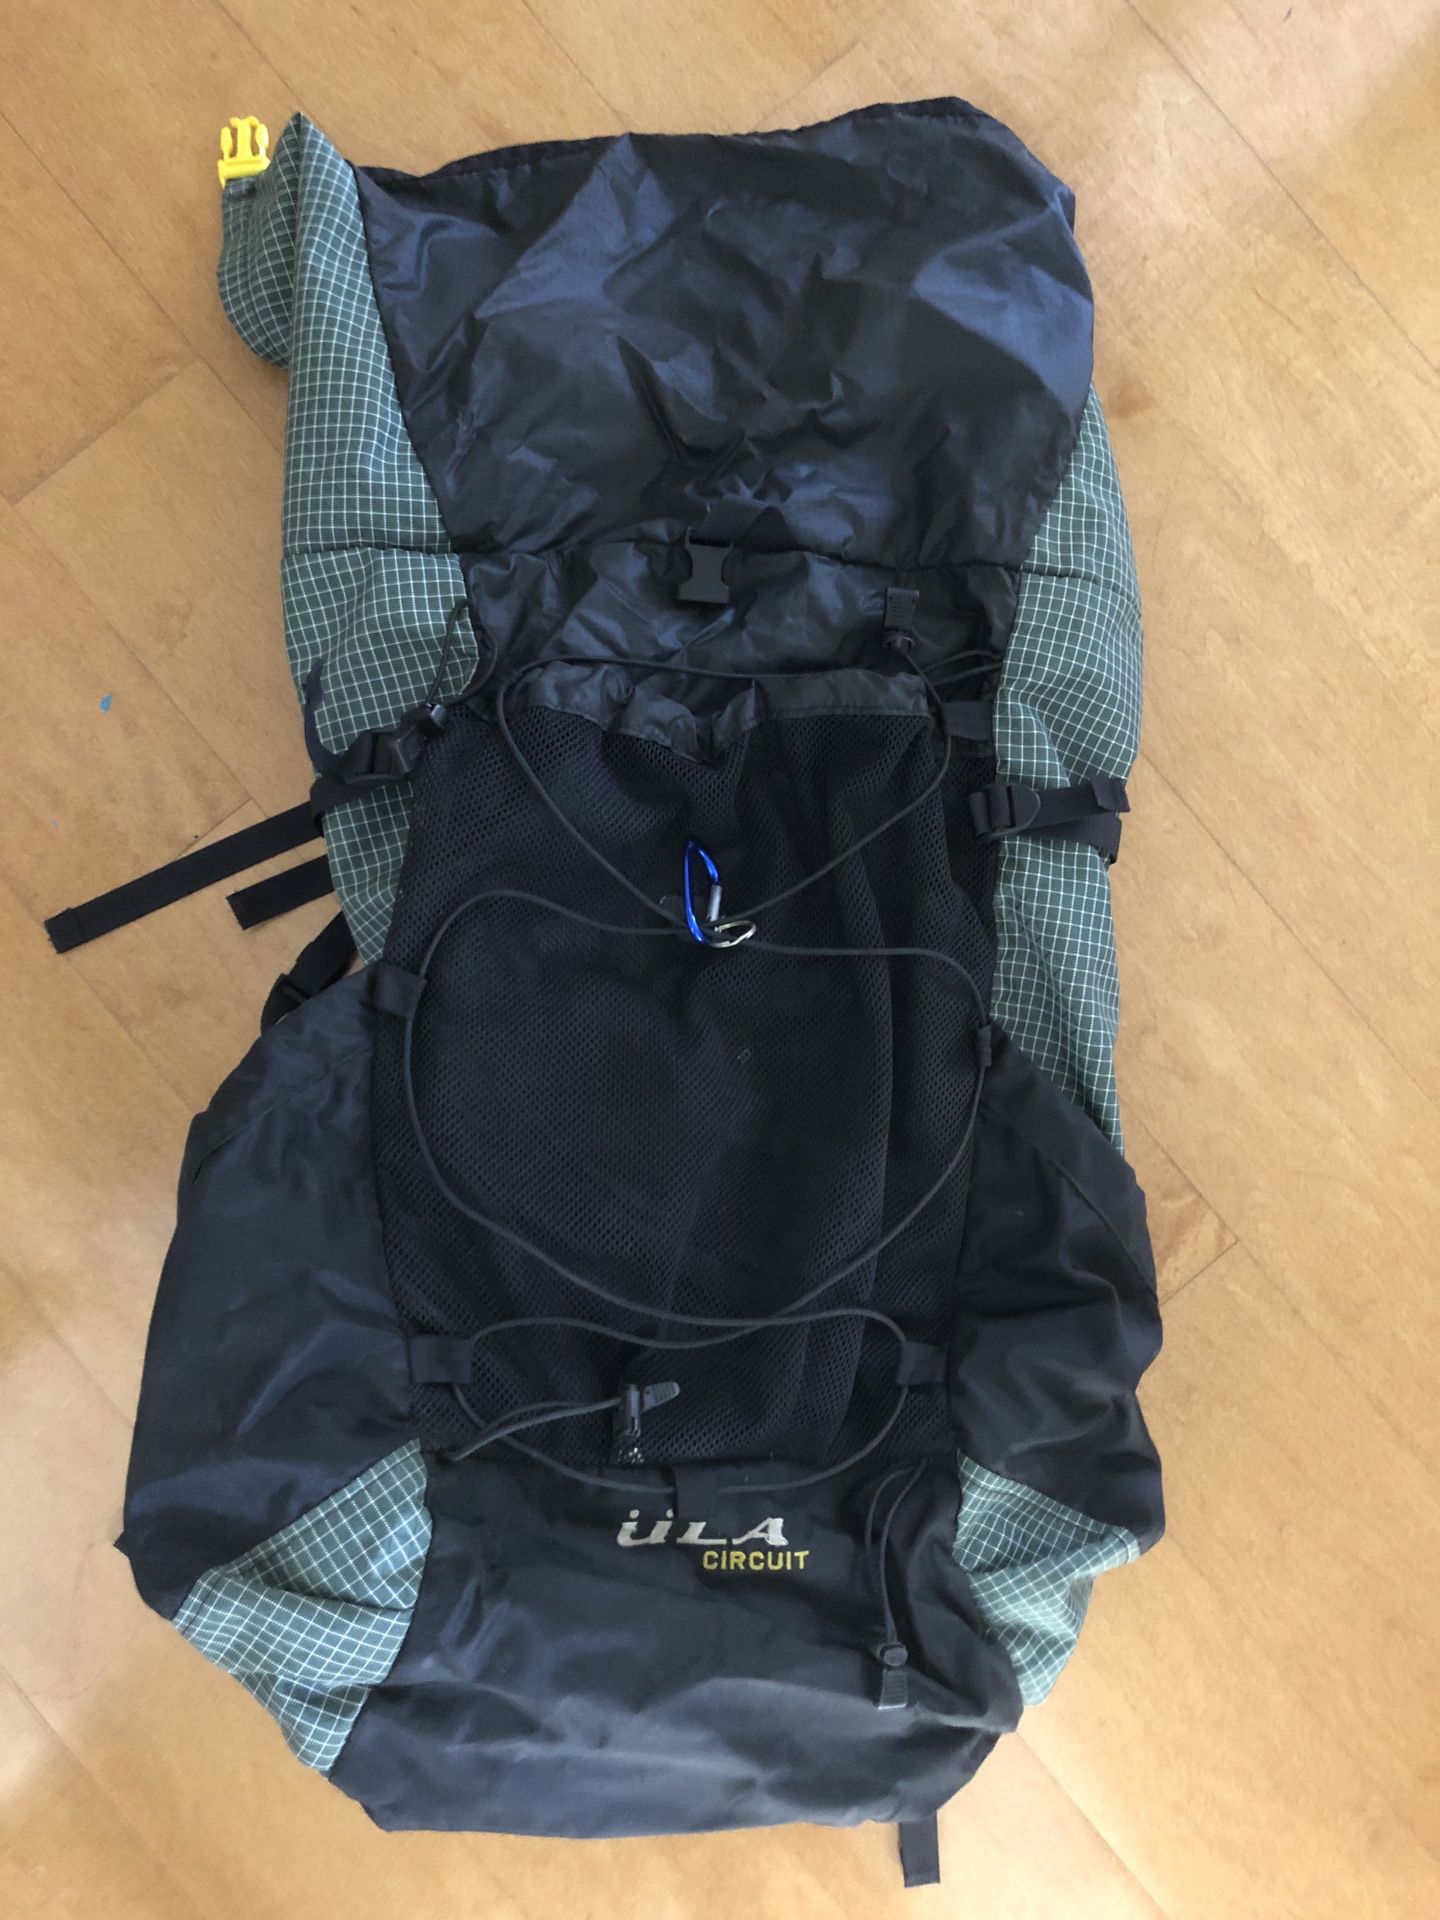 ULA Backpack For Sale